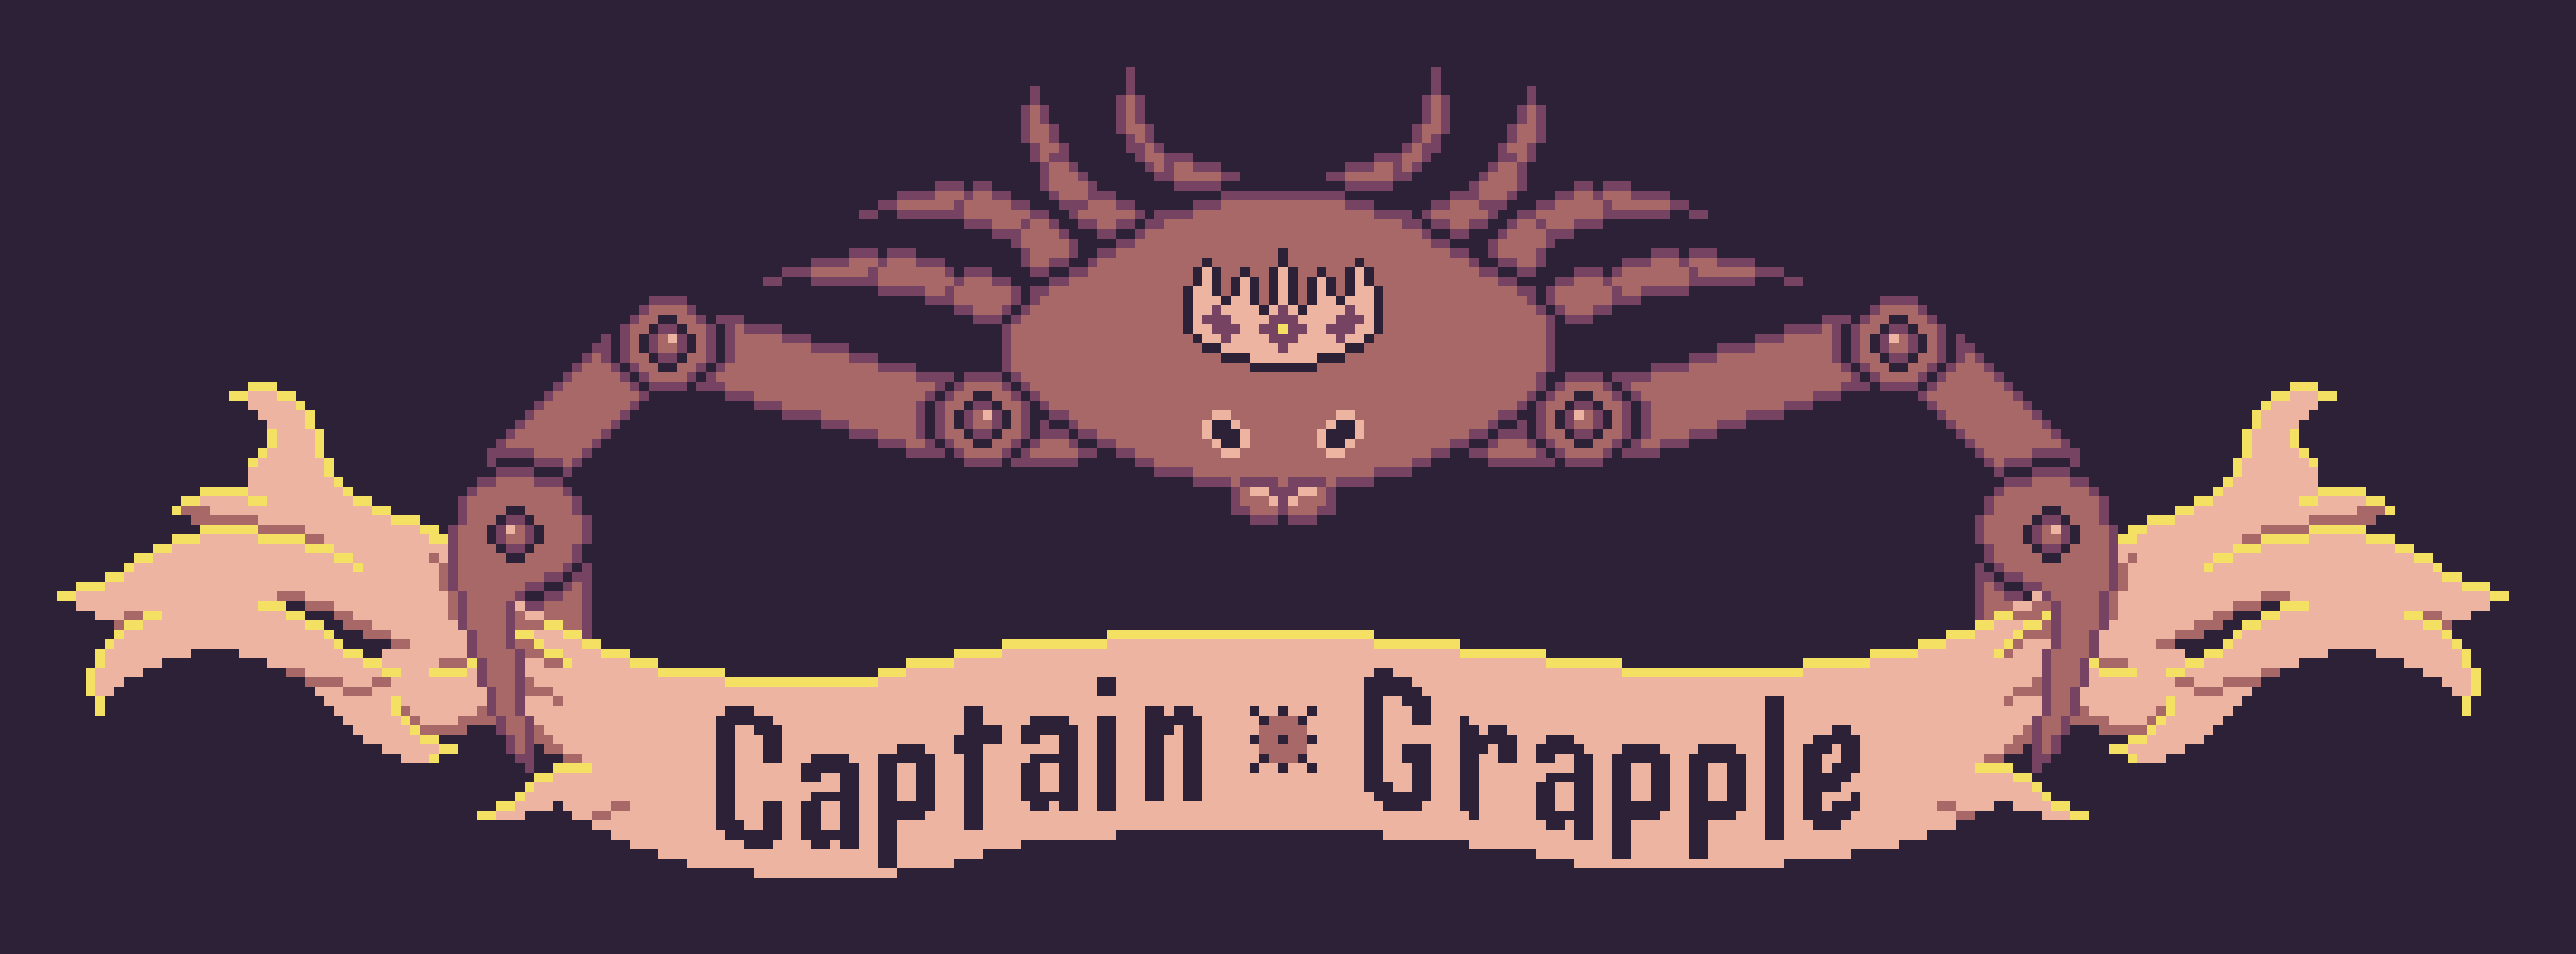 Captain Grapple